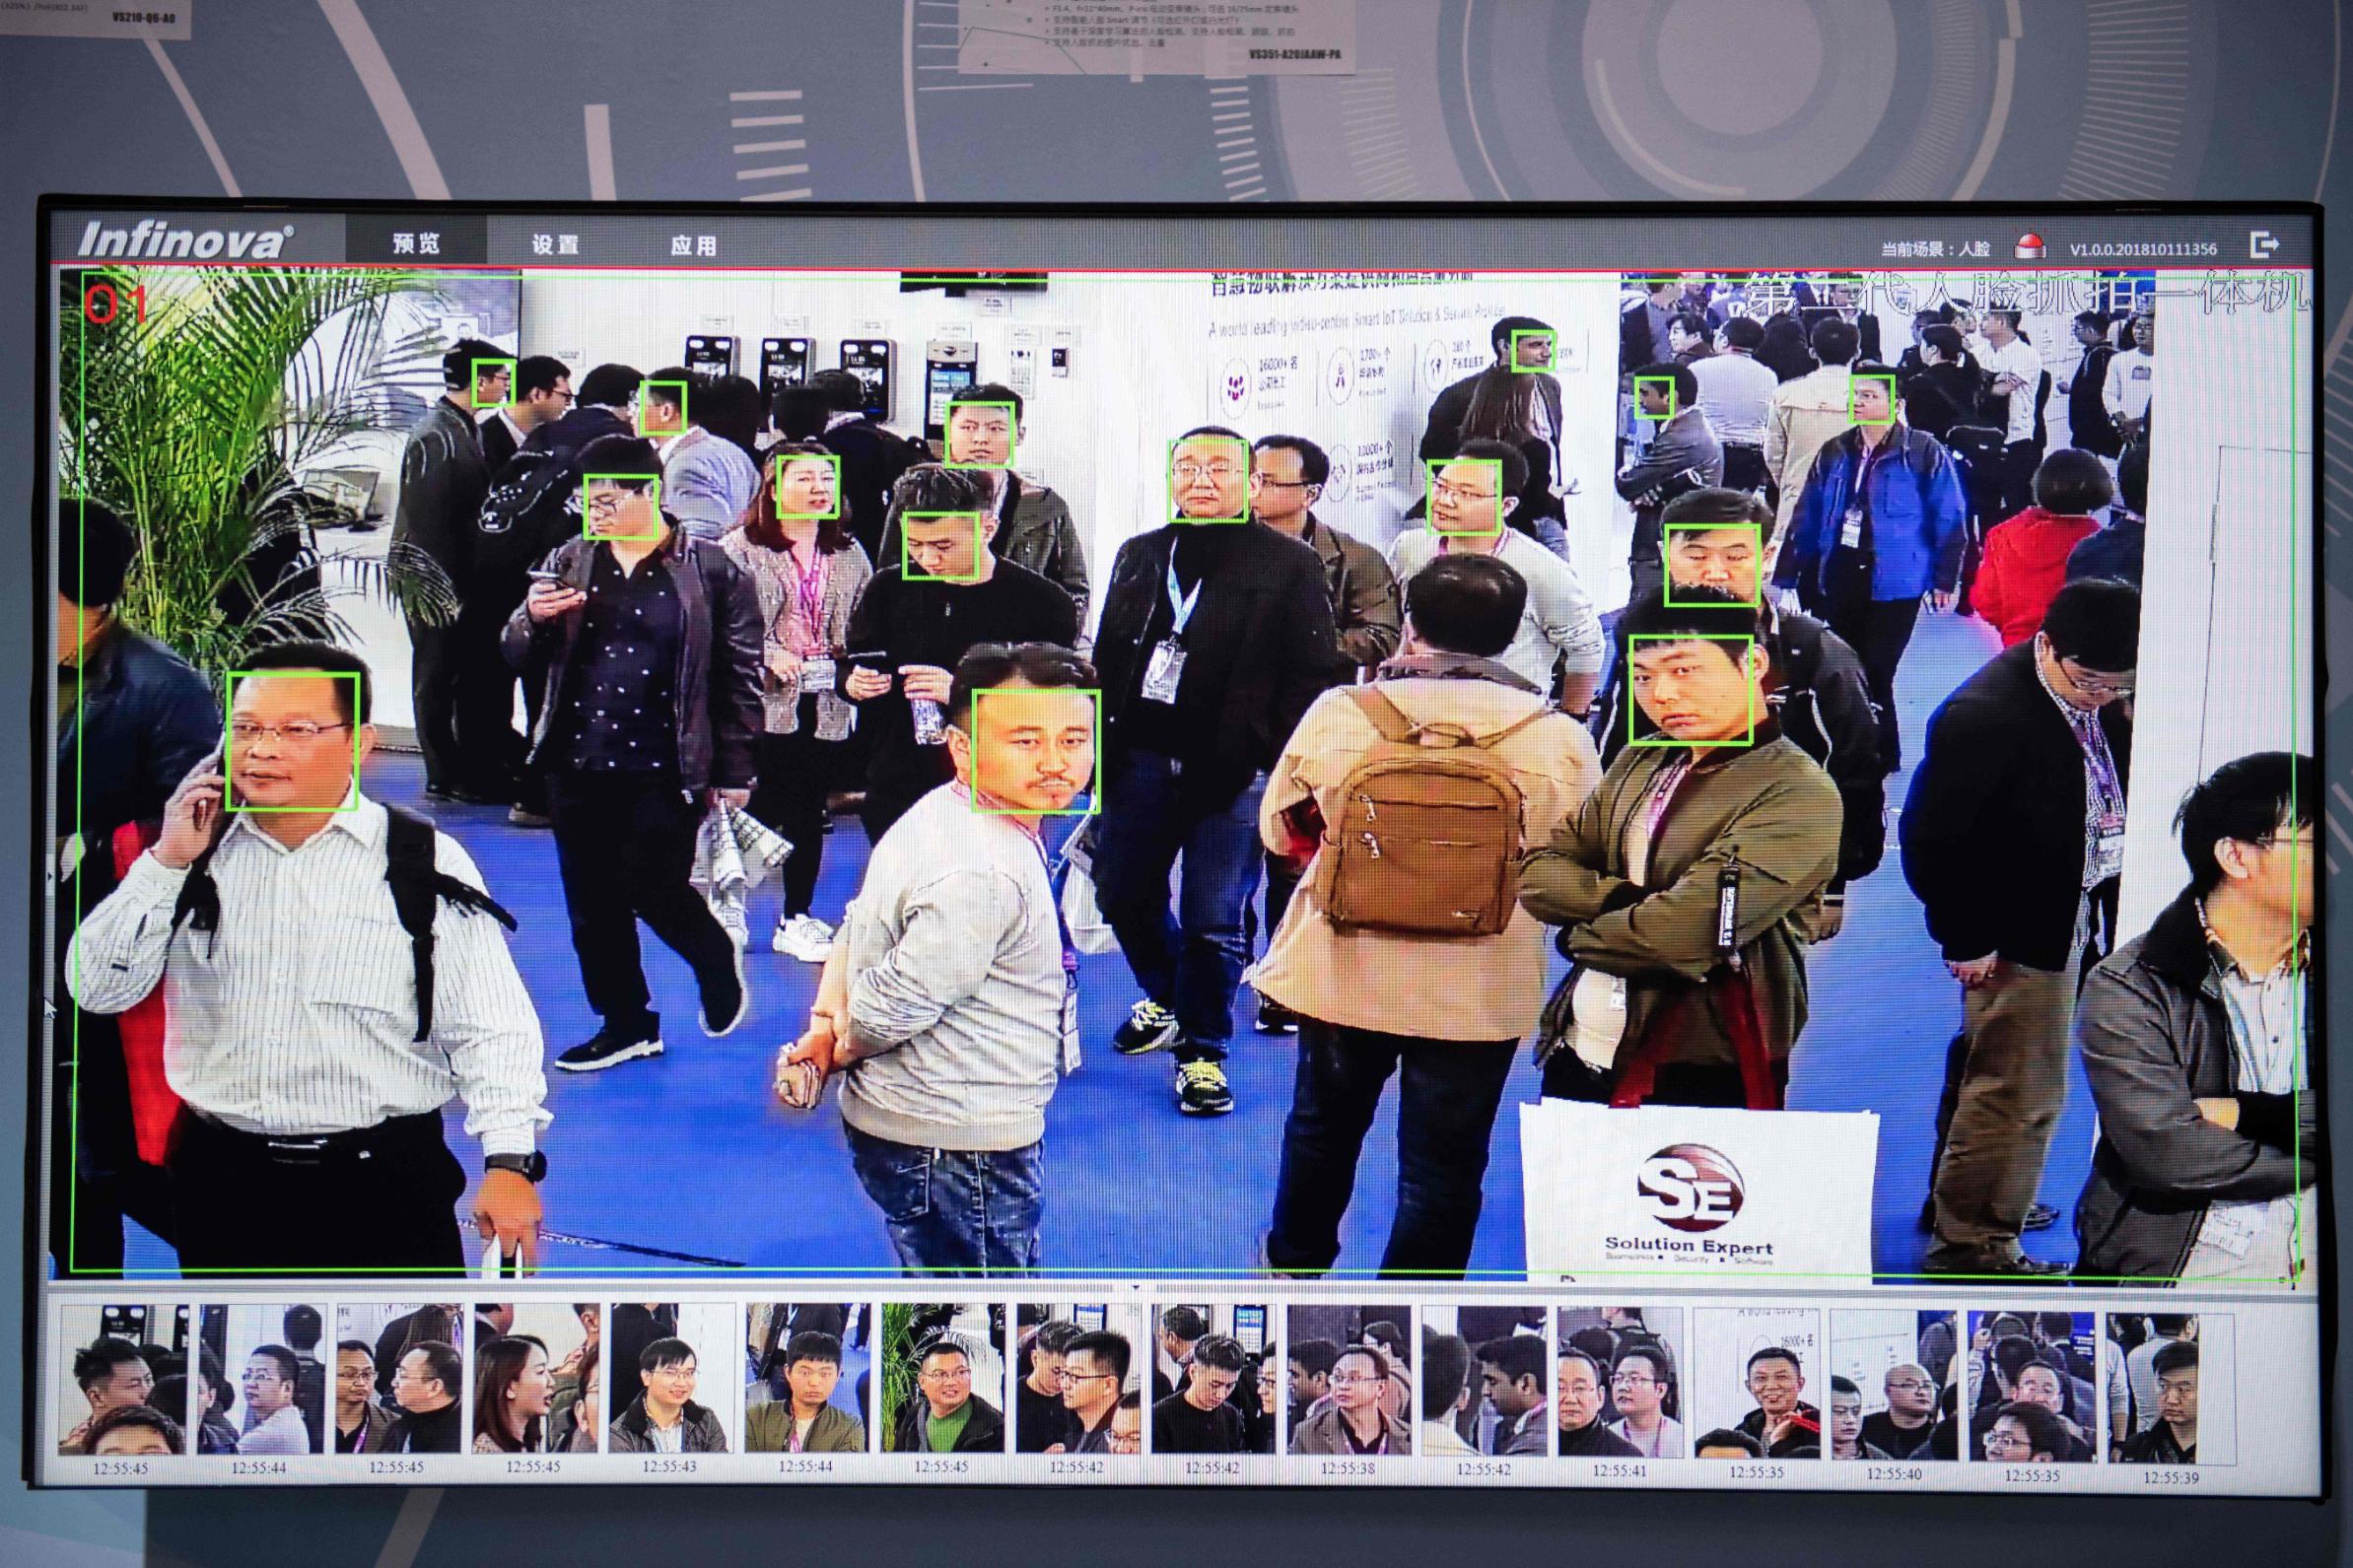 191202123203-china-facial-recognition-2018-1024-01.jpg